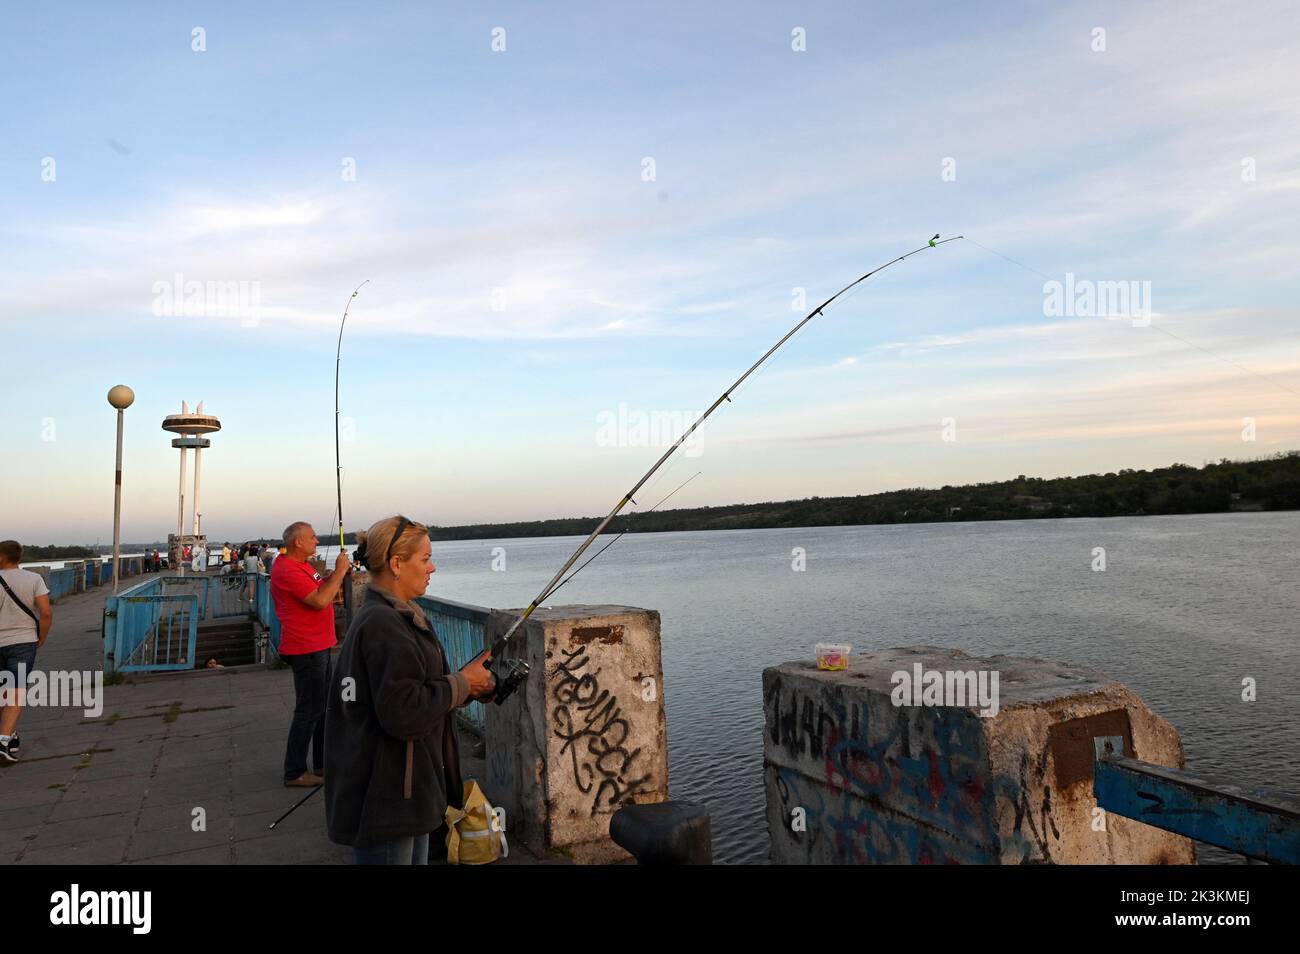 ZAPORIZHZHIA, UKRAINE - SEPTEMBER 2, 2022 - A woman fishes in Zaporizhzhia, southeastern Ukraine. Stock Photo